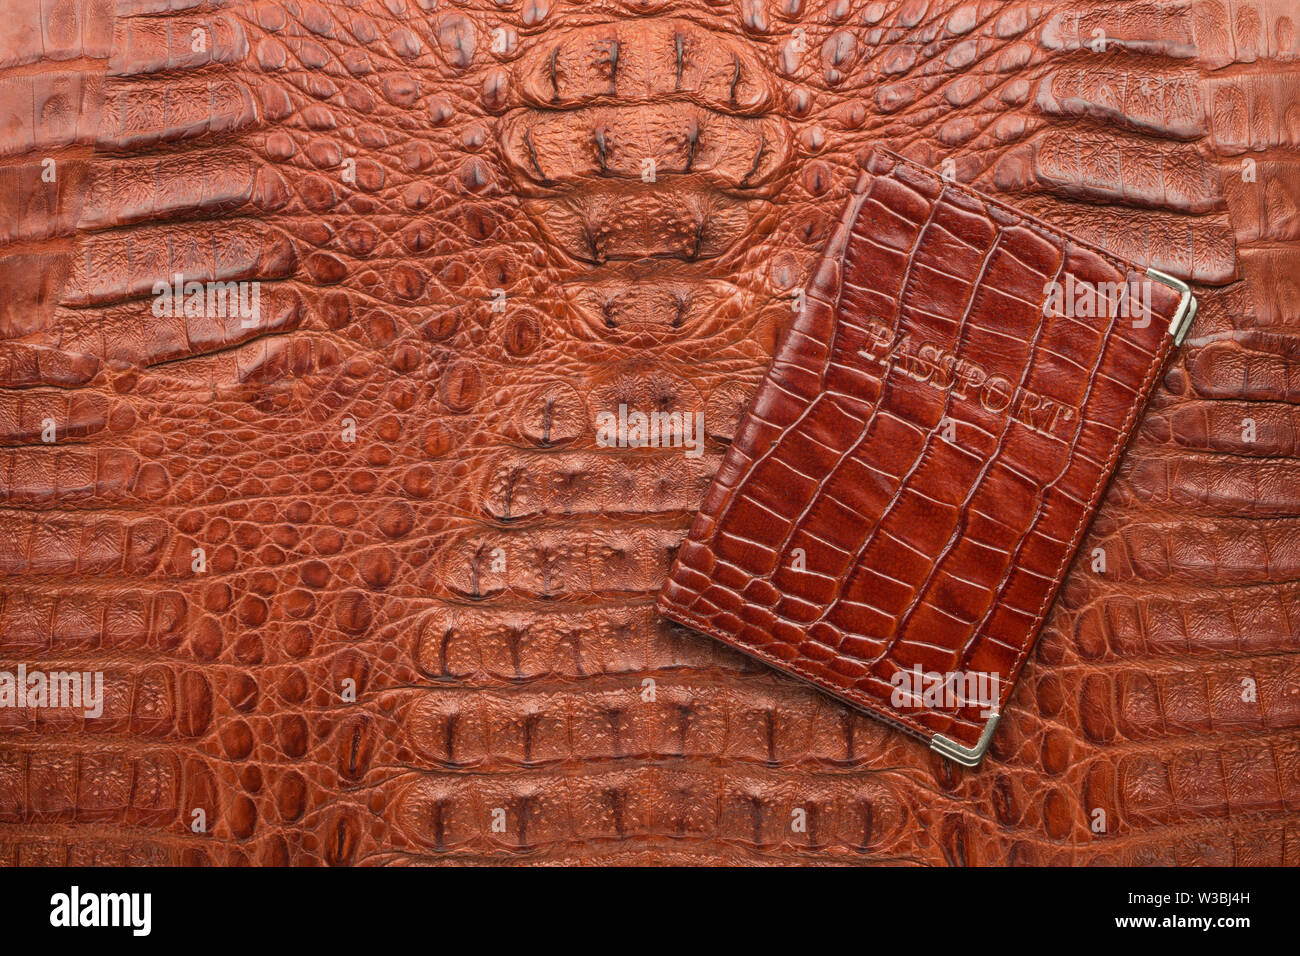 Crocodile Leather Passport Holder Cover